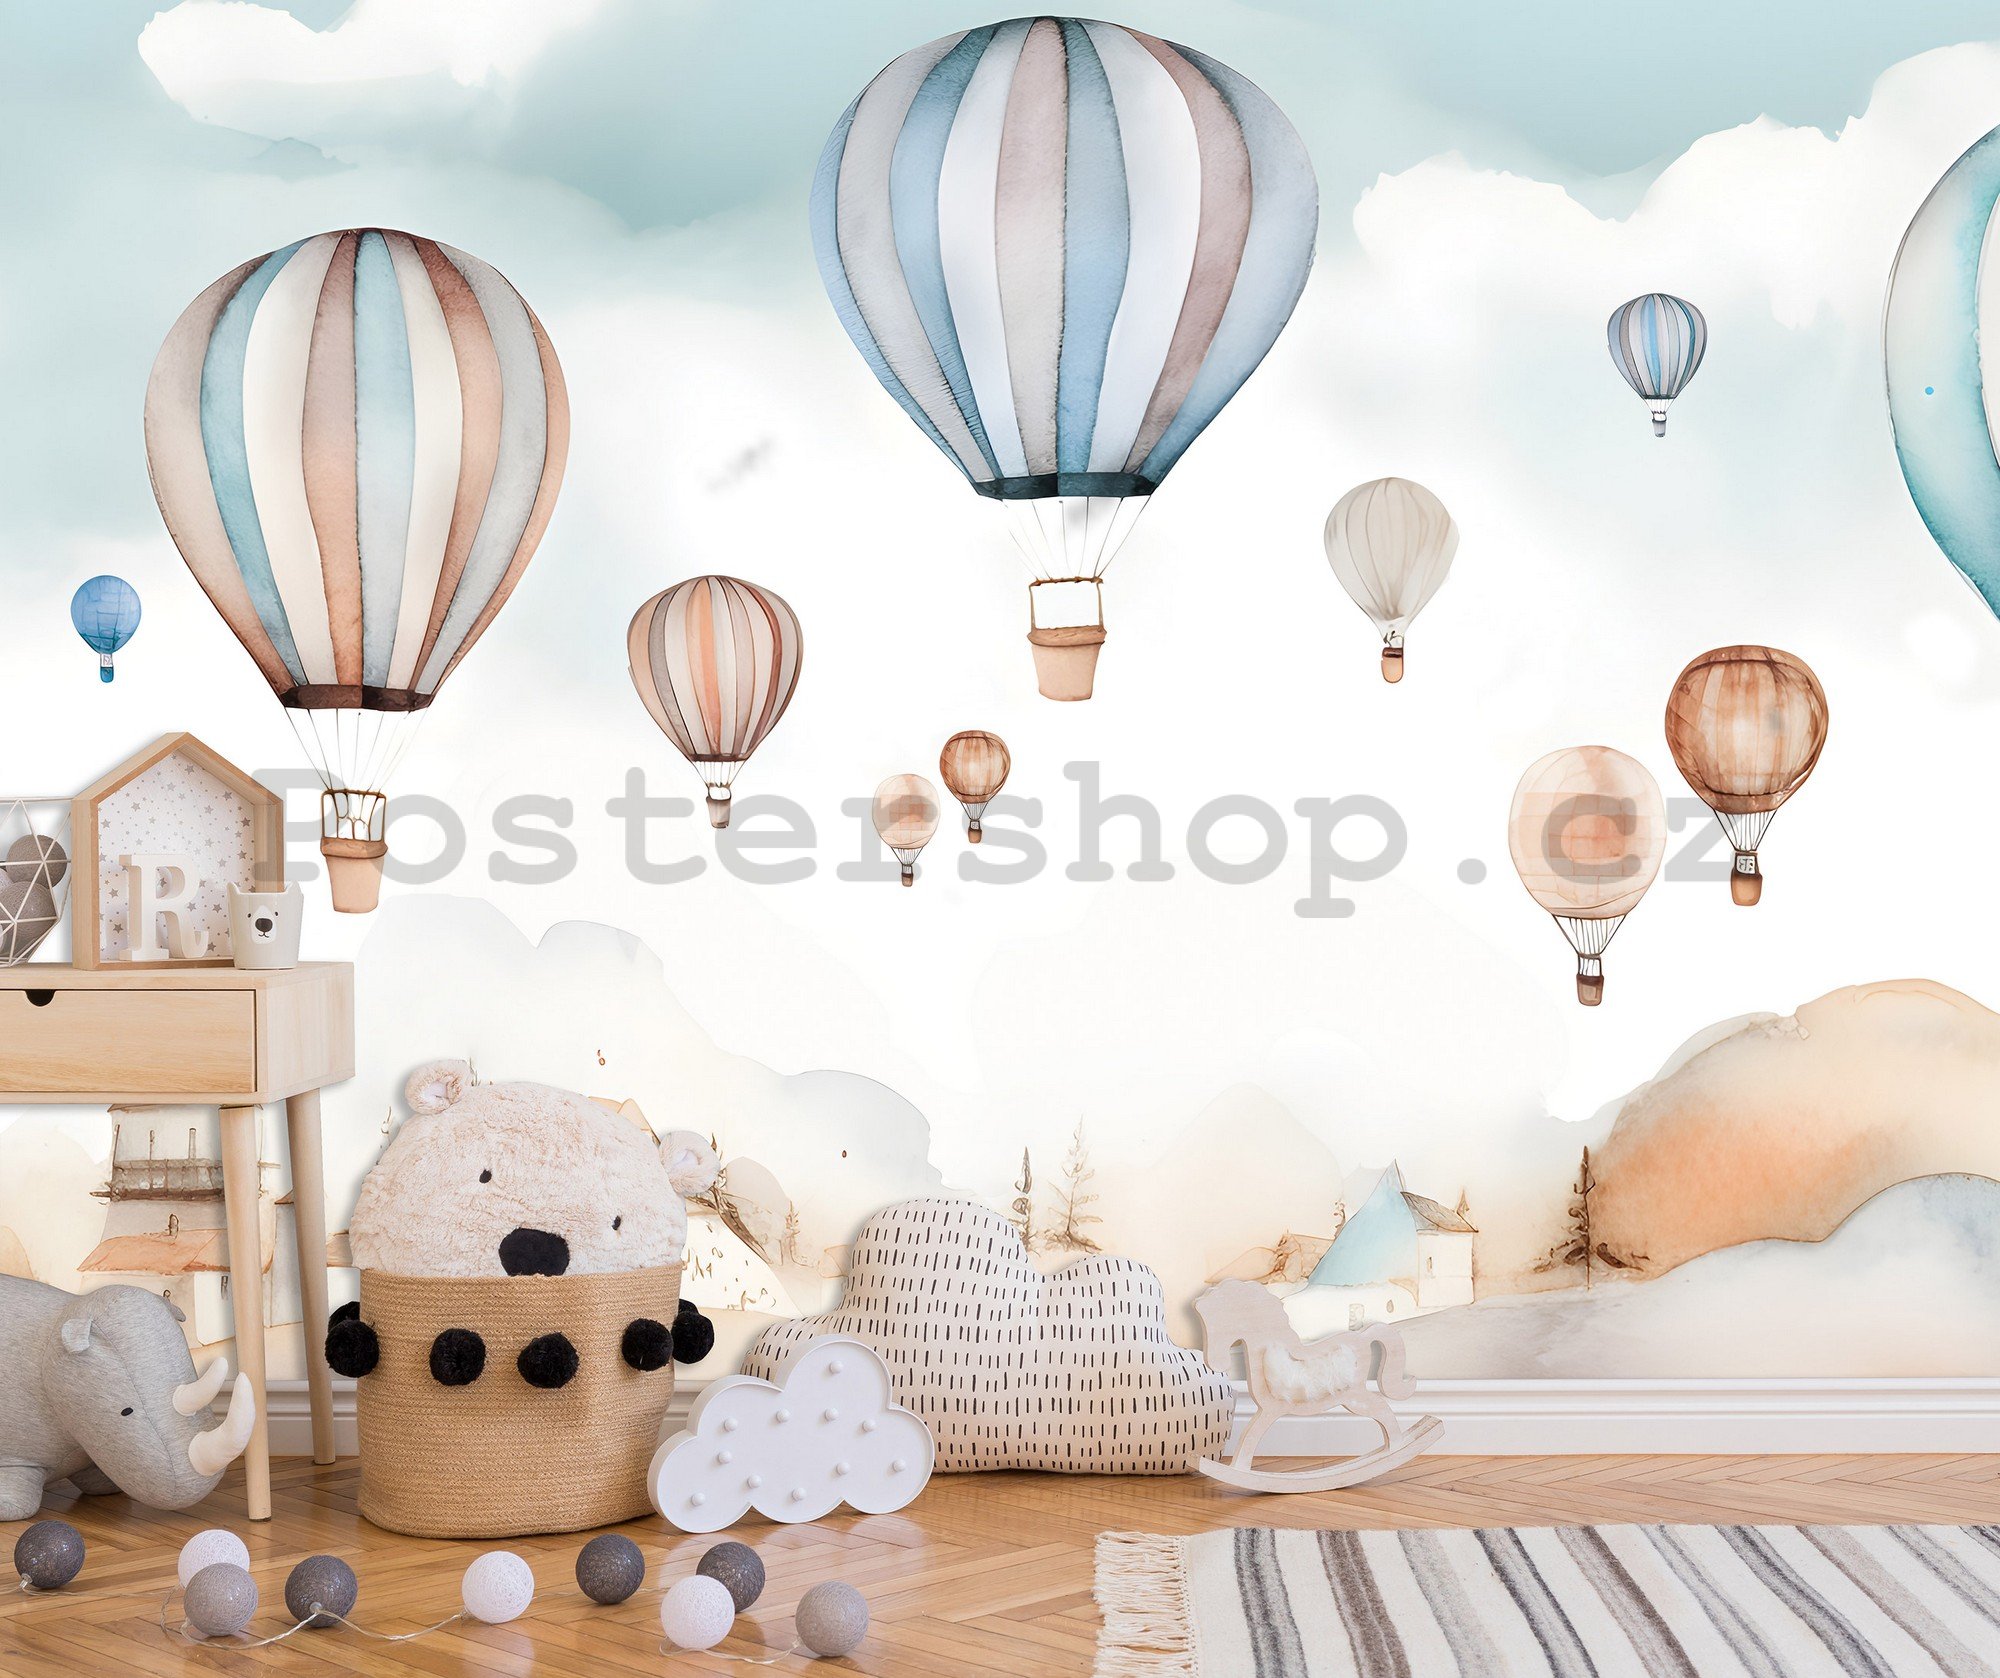 Fototapety vliesové: For kids fairytale watercolour balloons - 254x184 cm